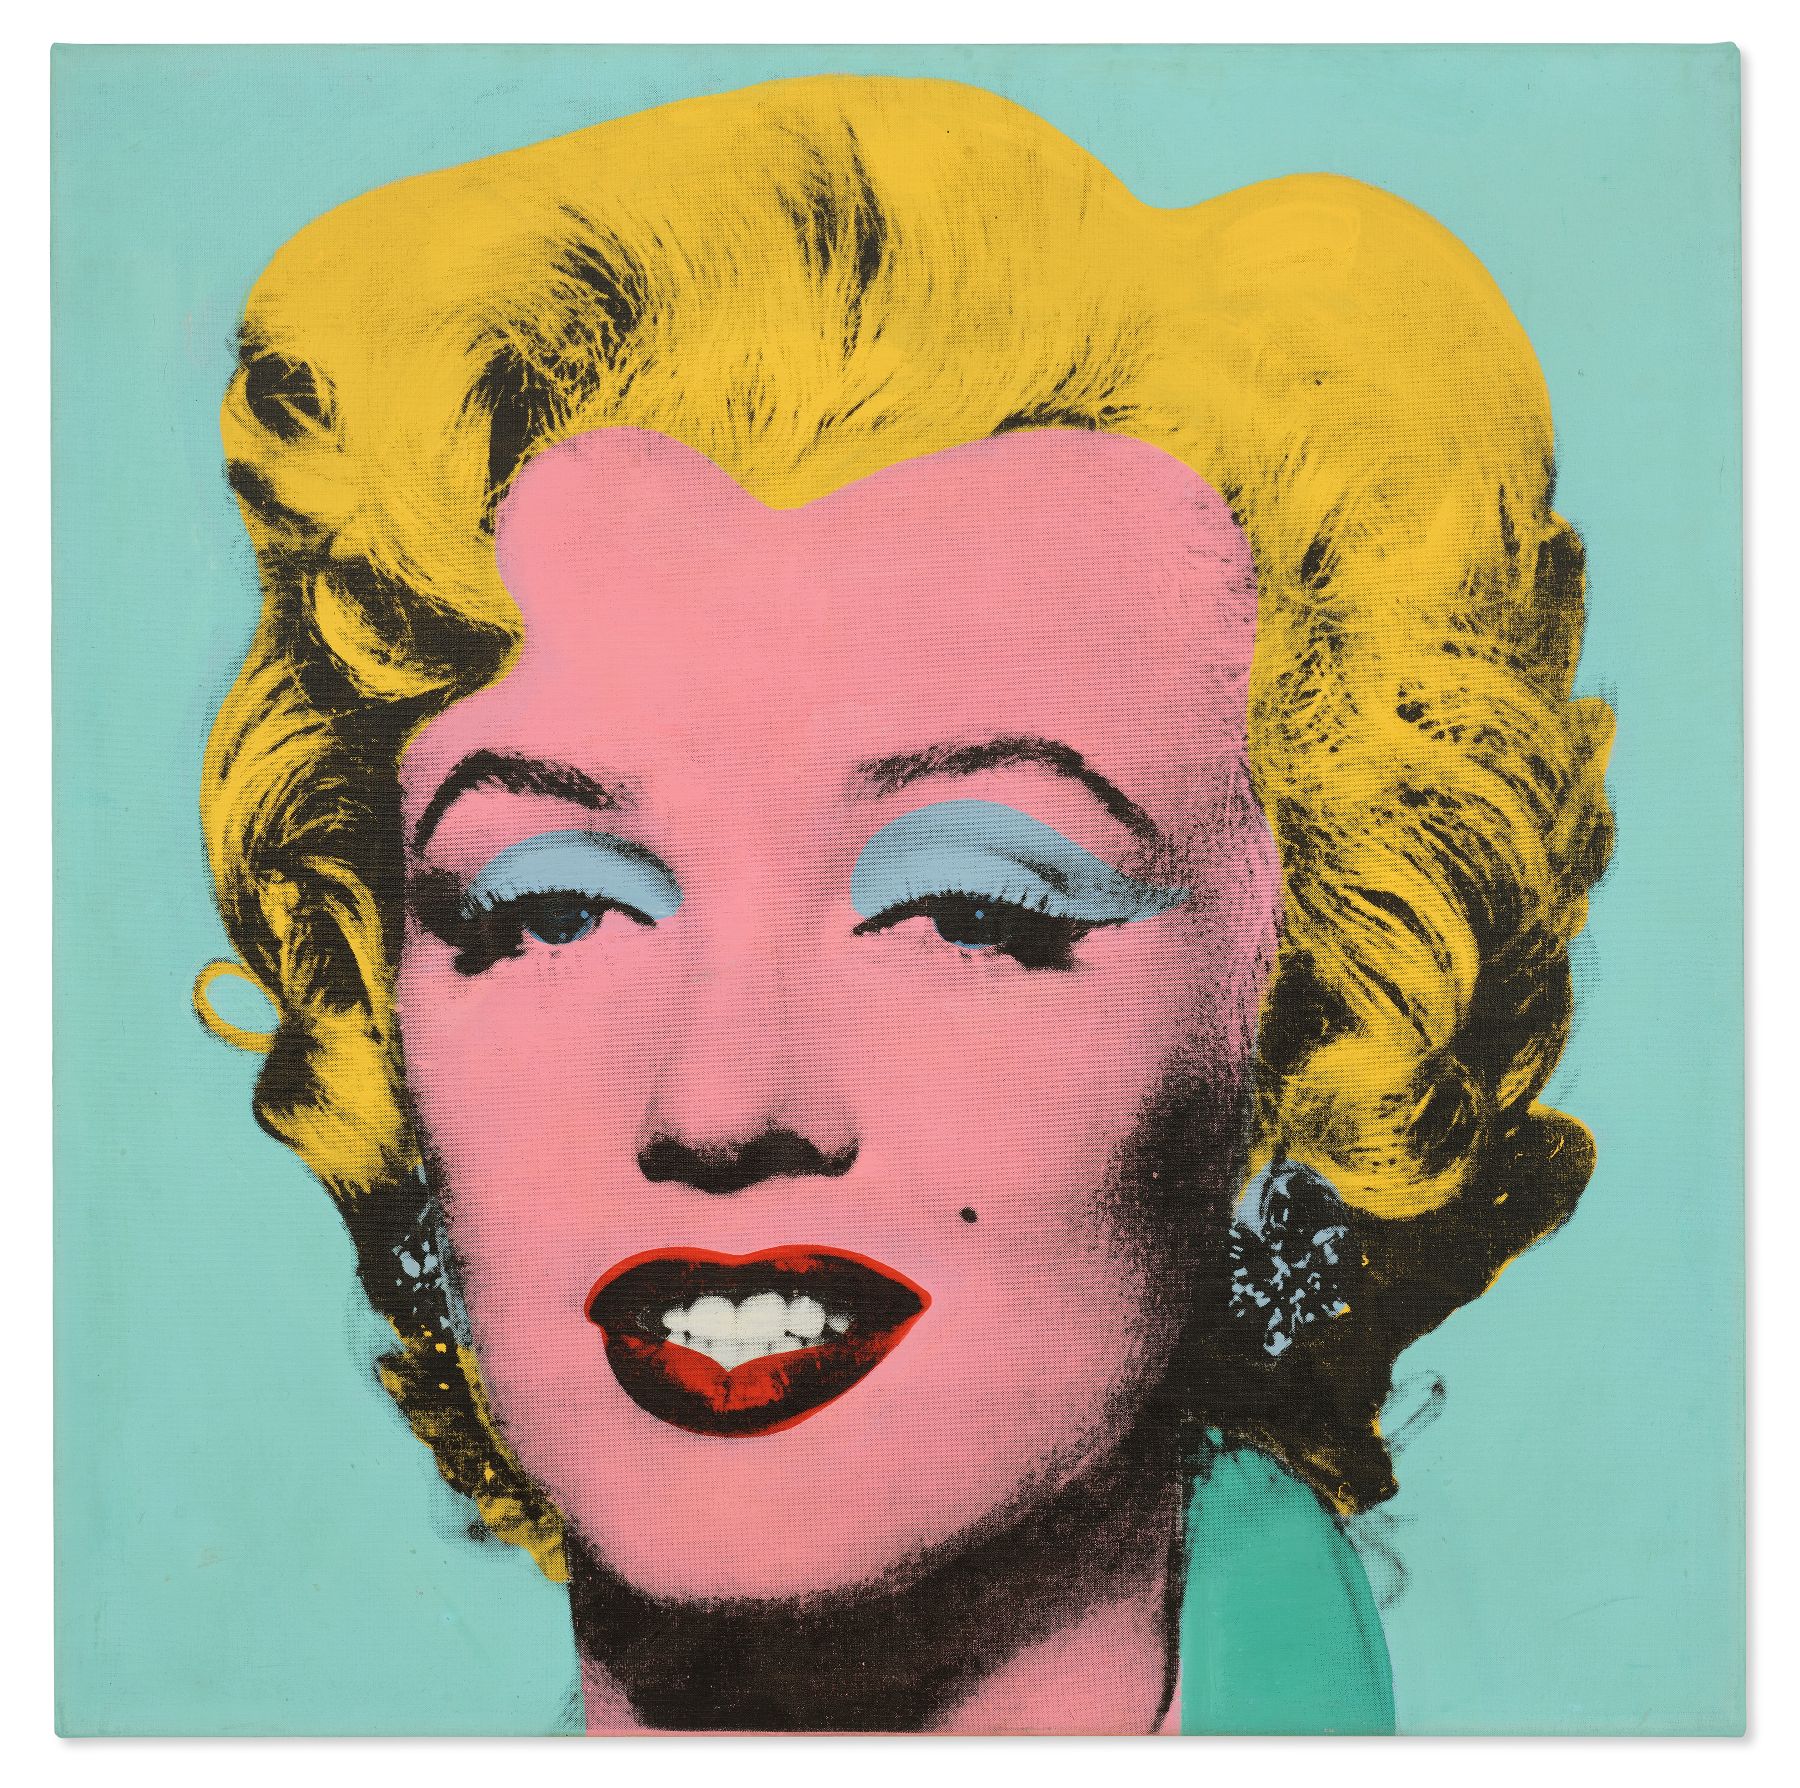 Andy Warhol, Shot Sage Blue Marilyn, 1964. Courtesy Christie's Imaged Ltd.